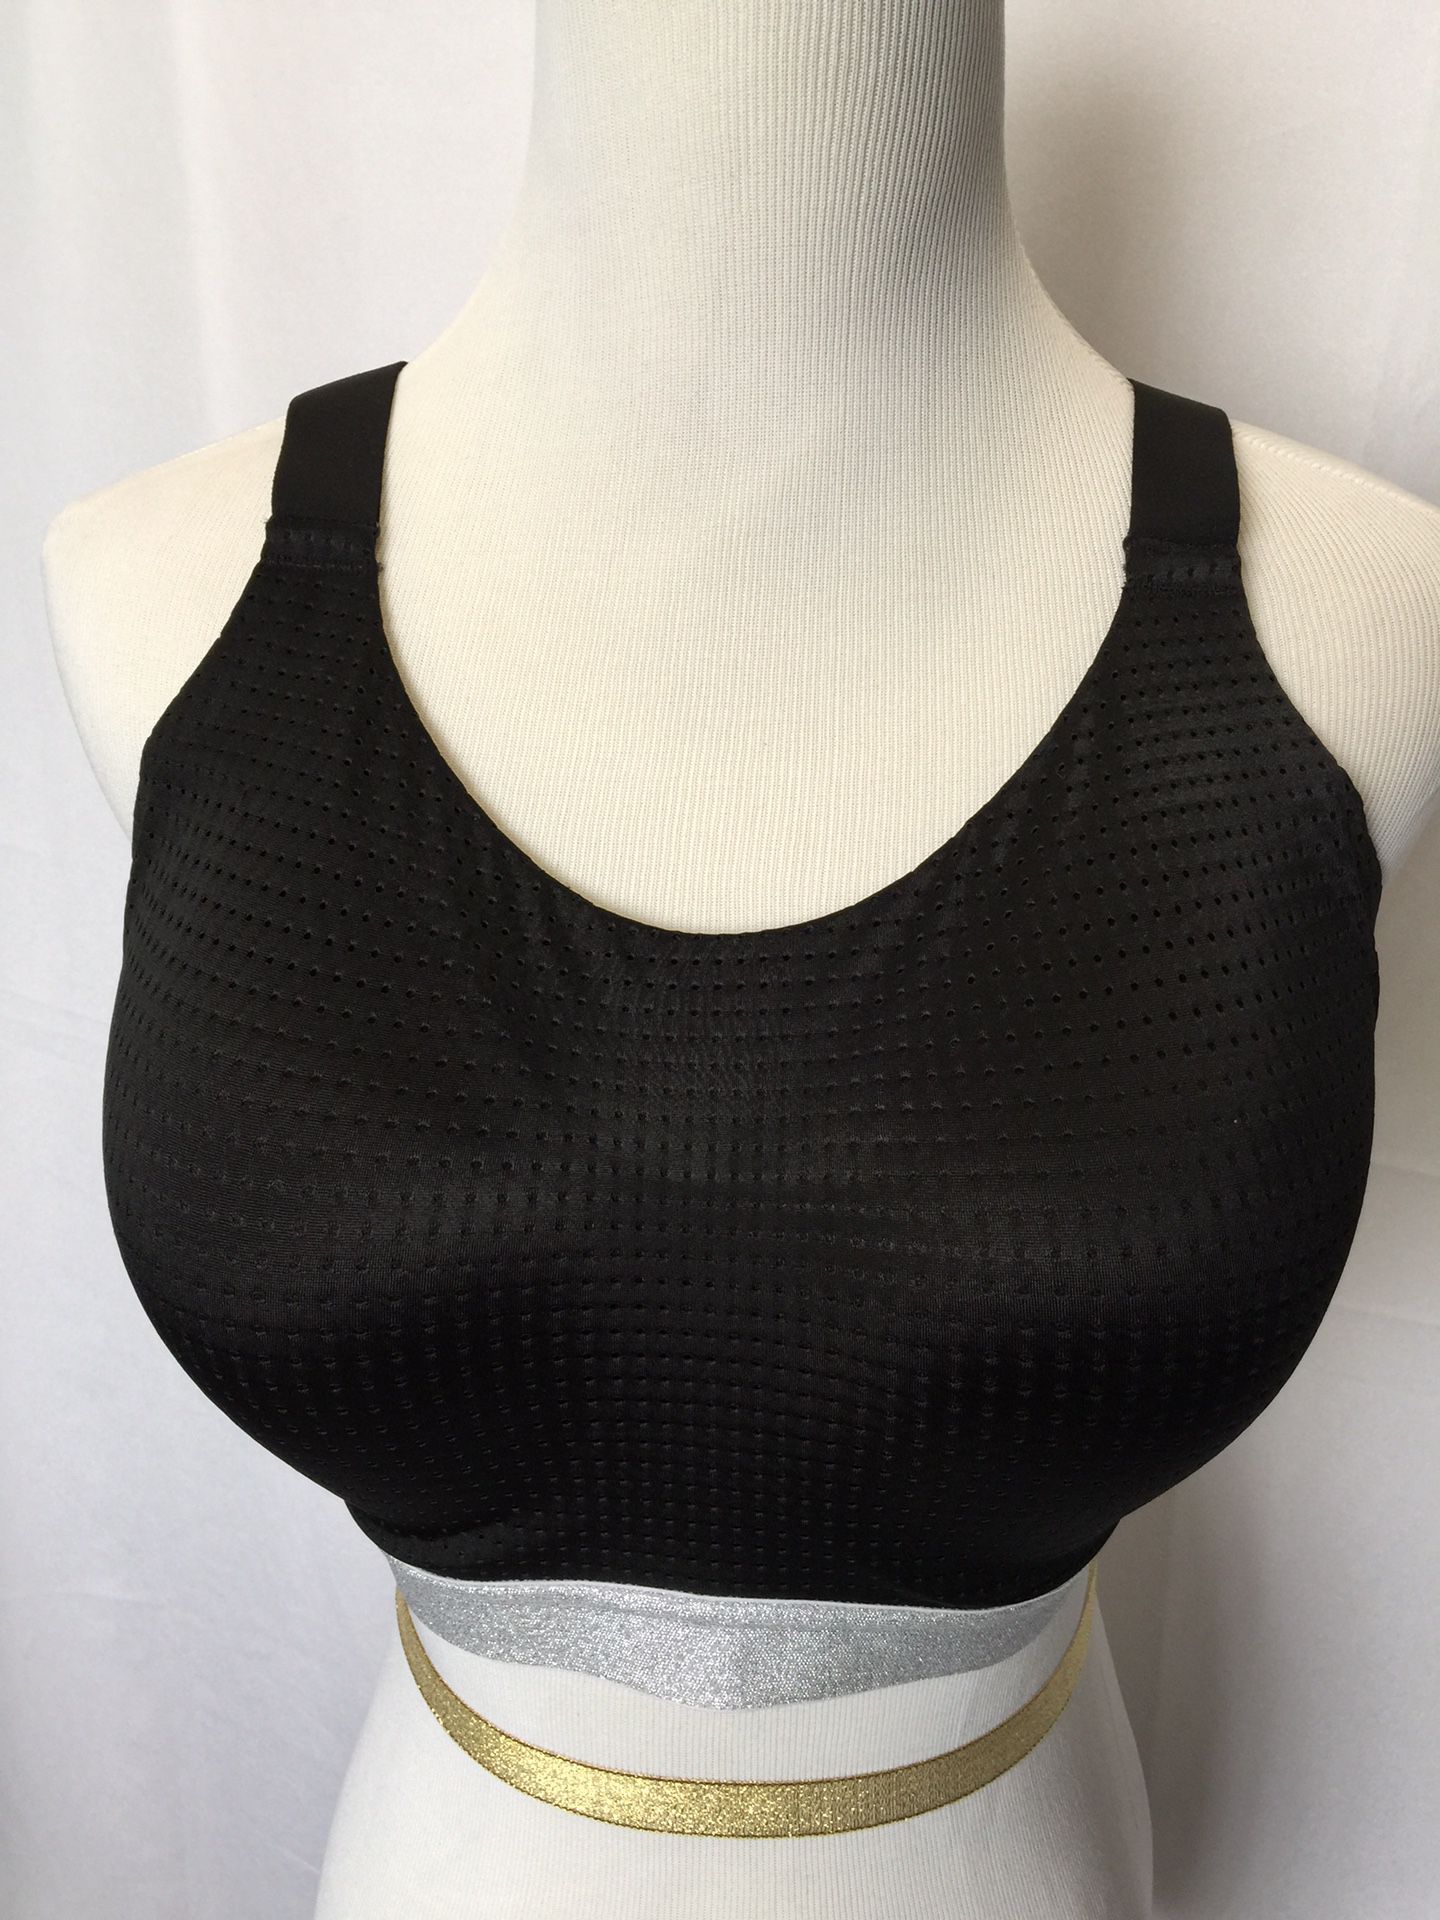 Women Clothing Victoria’s Secret sports bra size 34 C